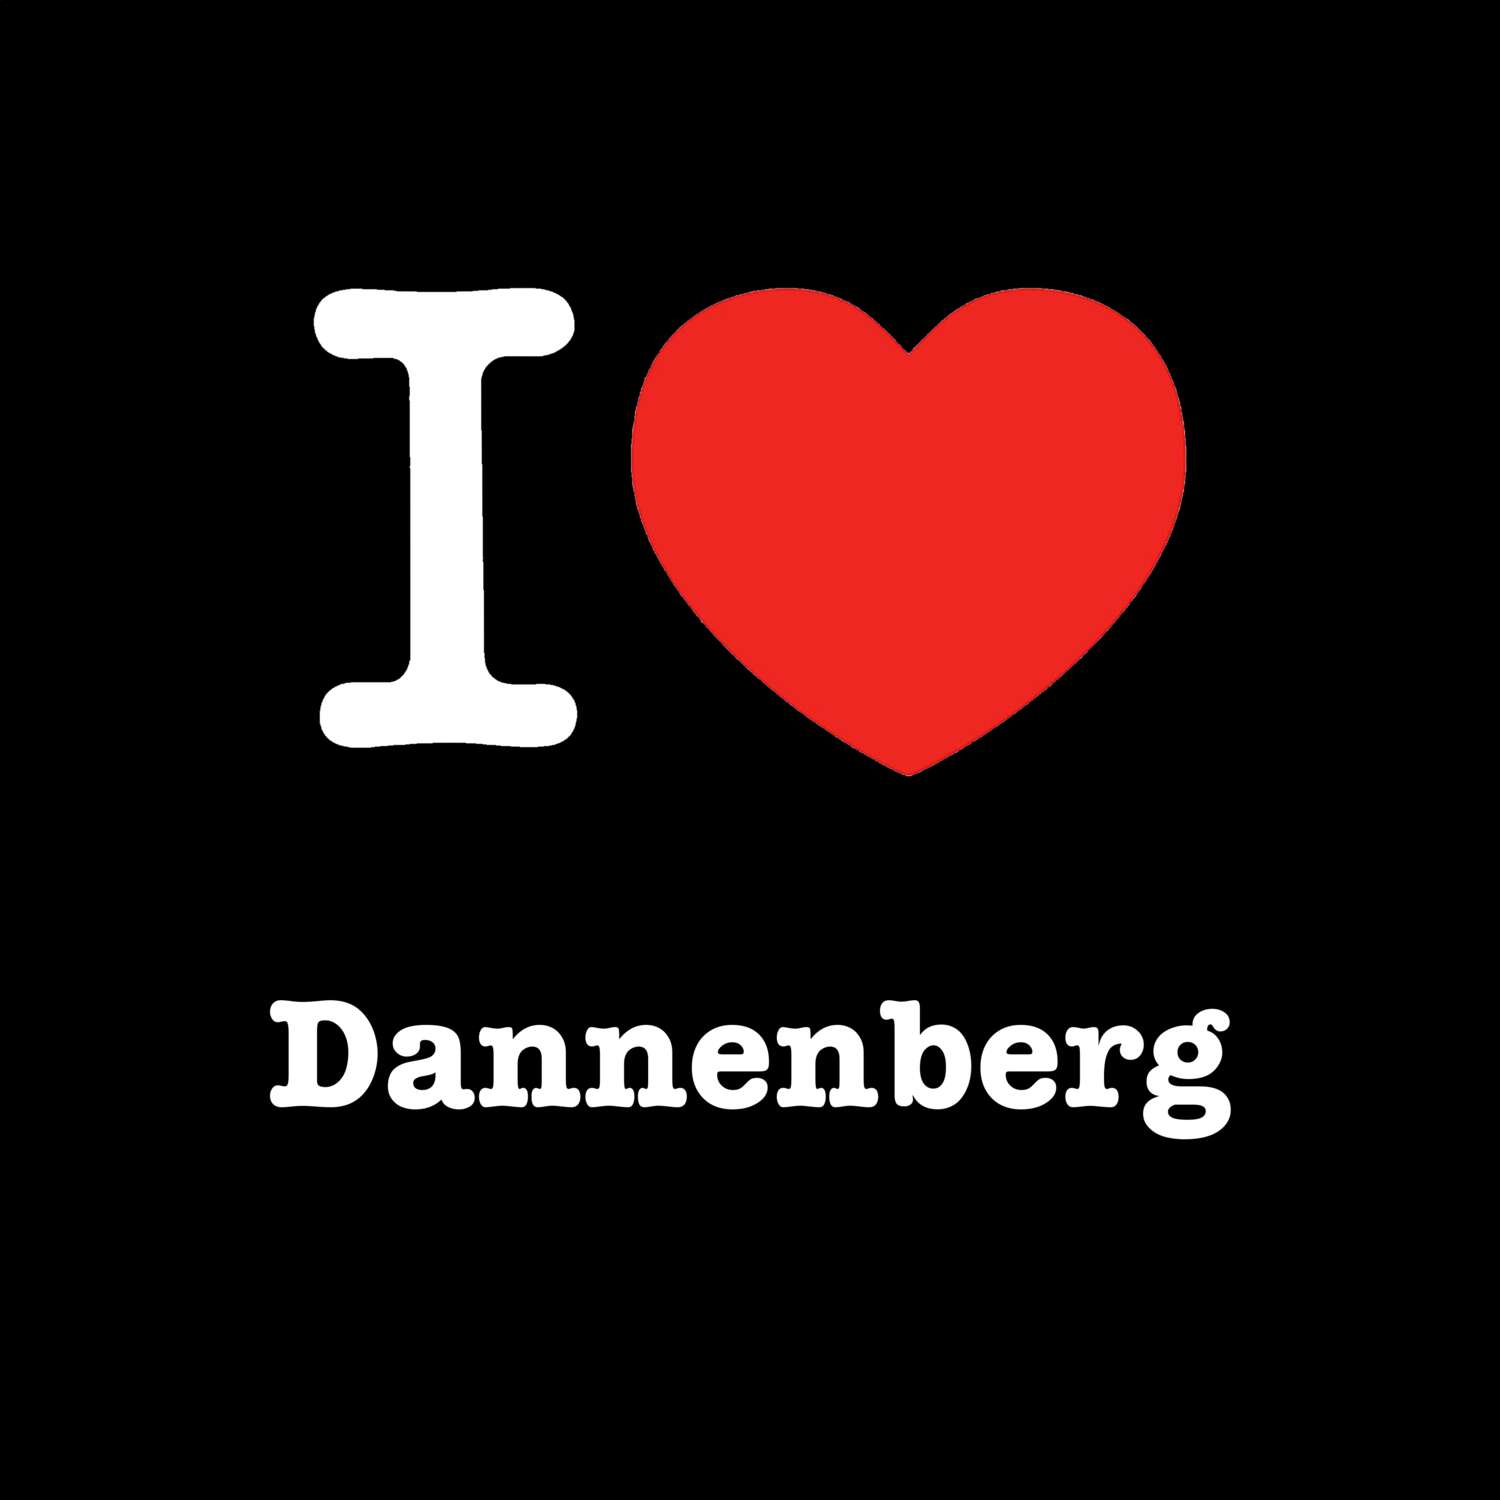 Dannenberg T-Shirt »I love«